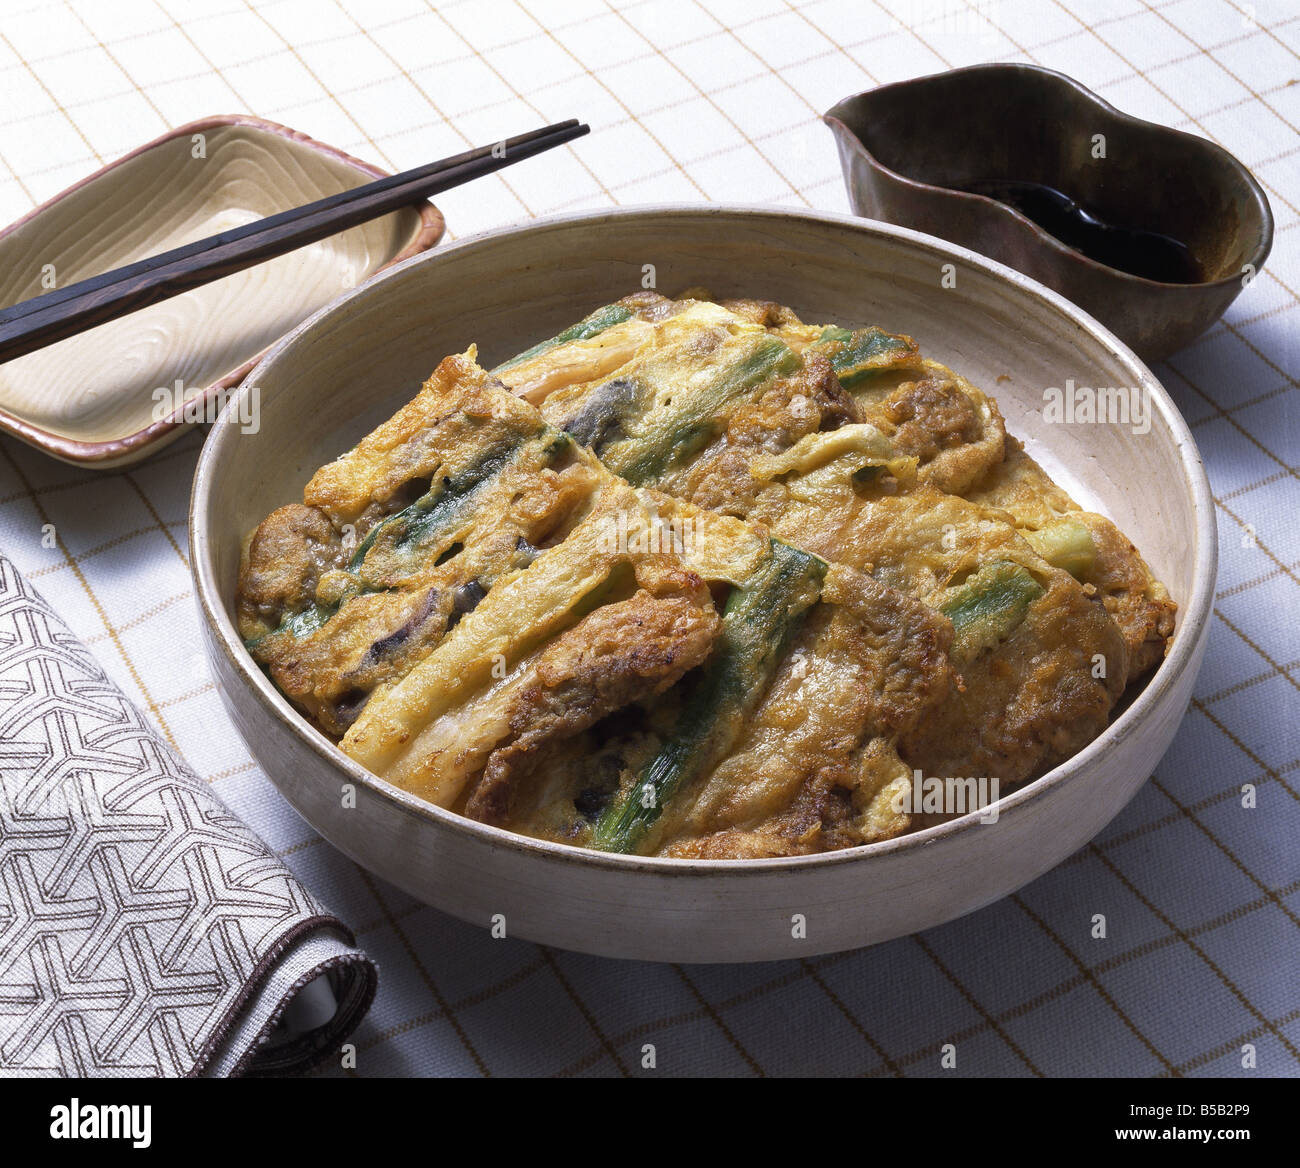 Korean Panfried Food Stock Photo